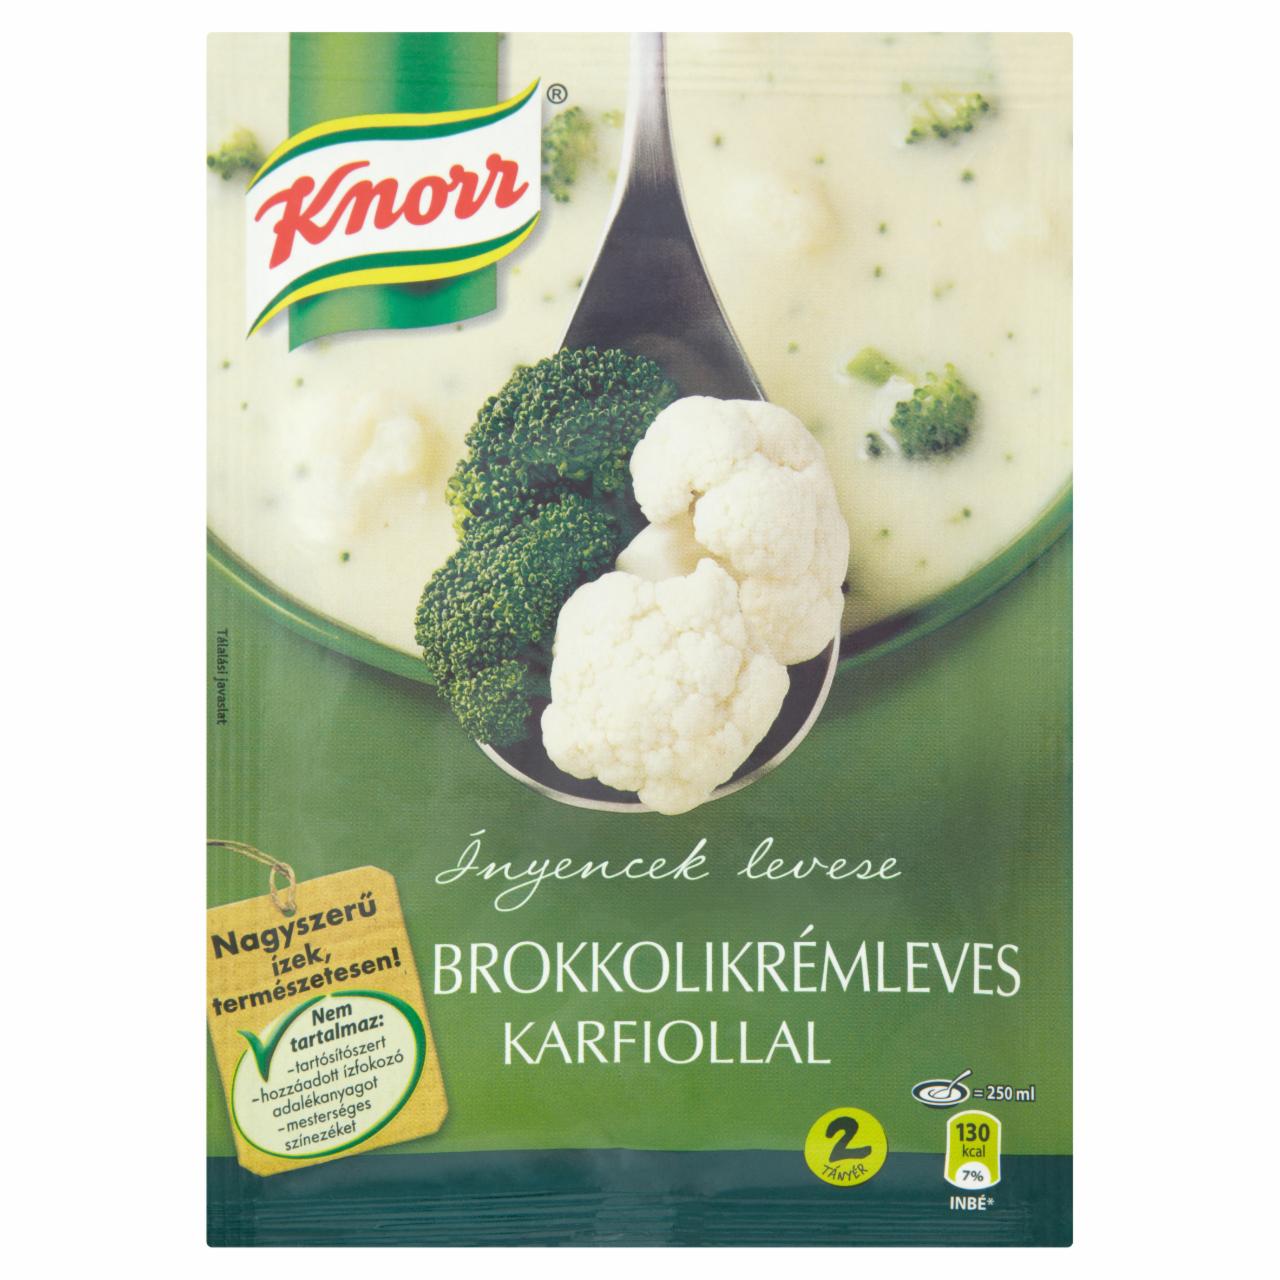 Képek - Ínyencek Levese brokkolikrémleves karfiollal Knorr